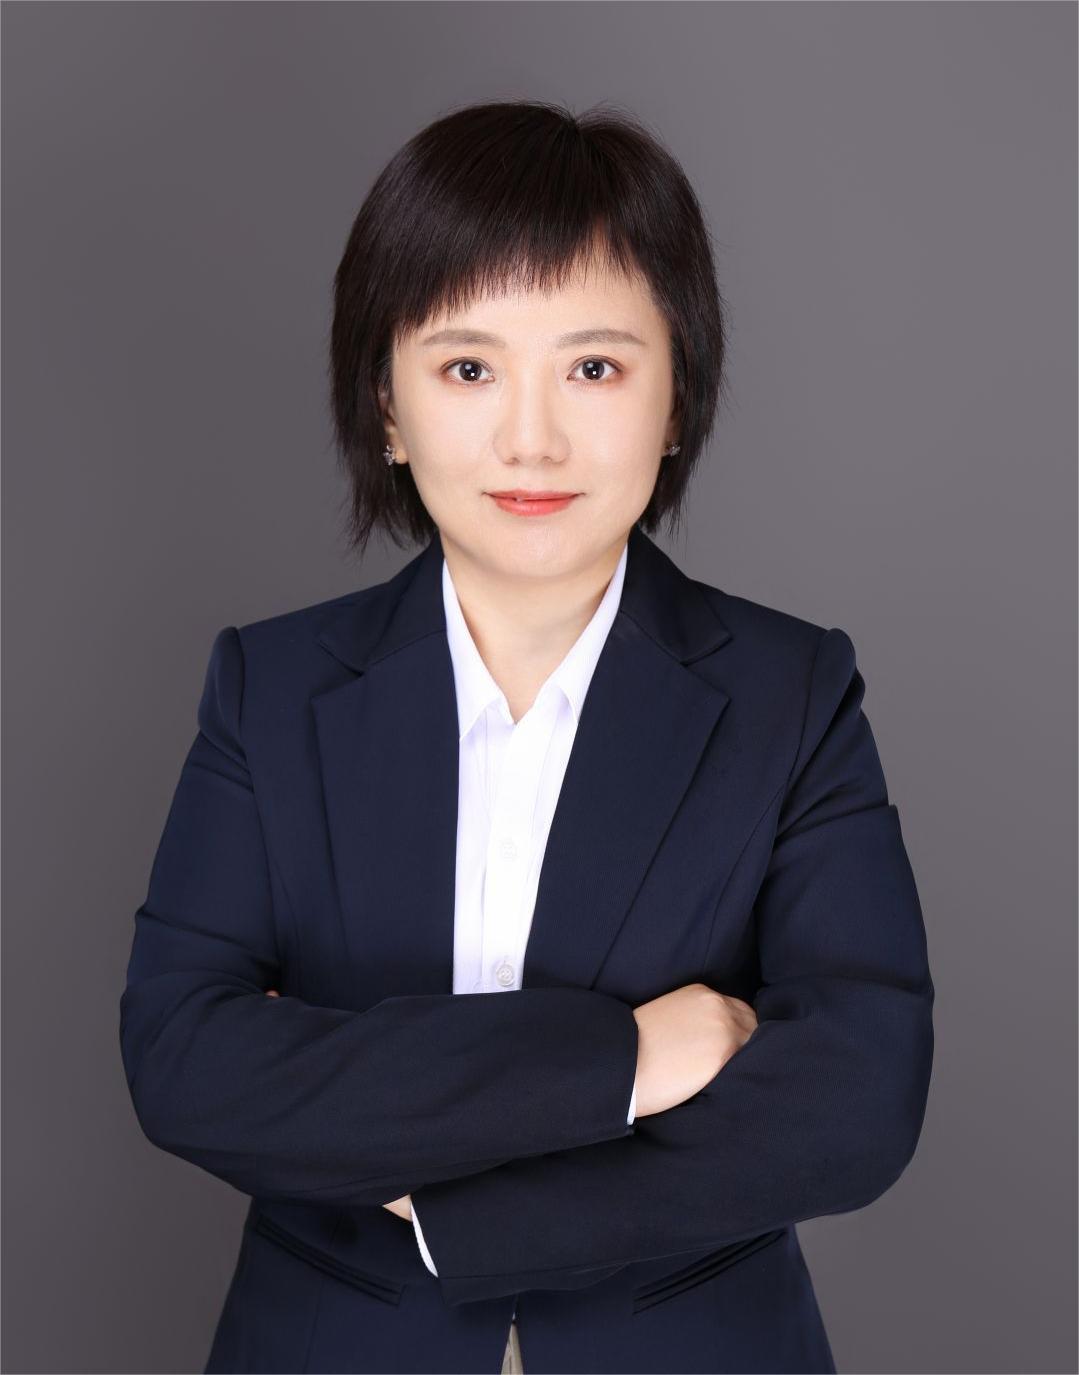 Patent-Attorney: Liu, Yan